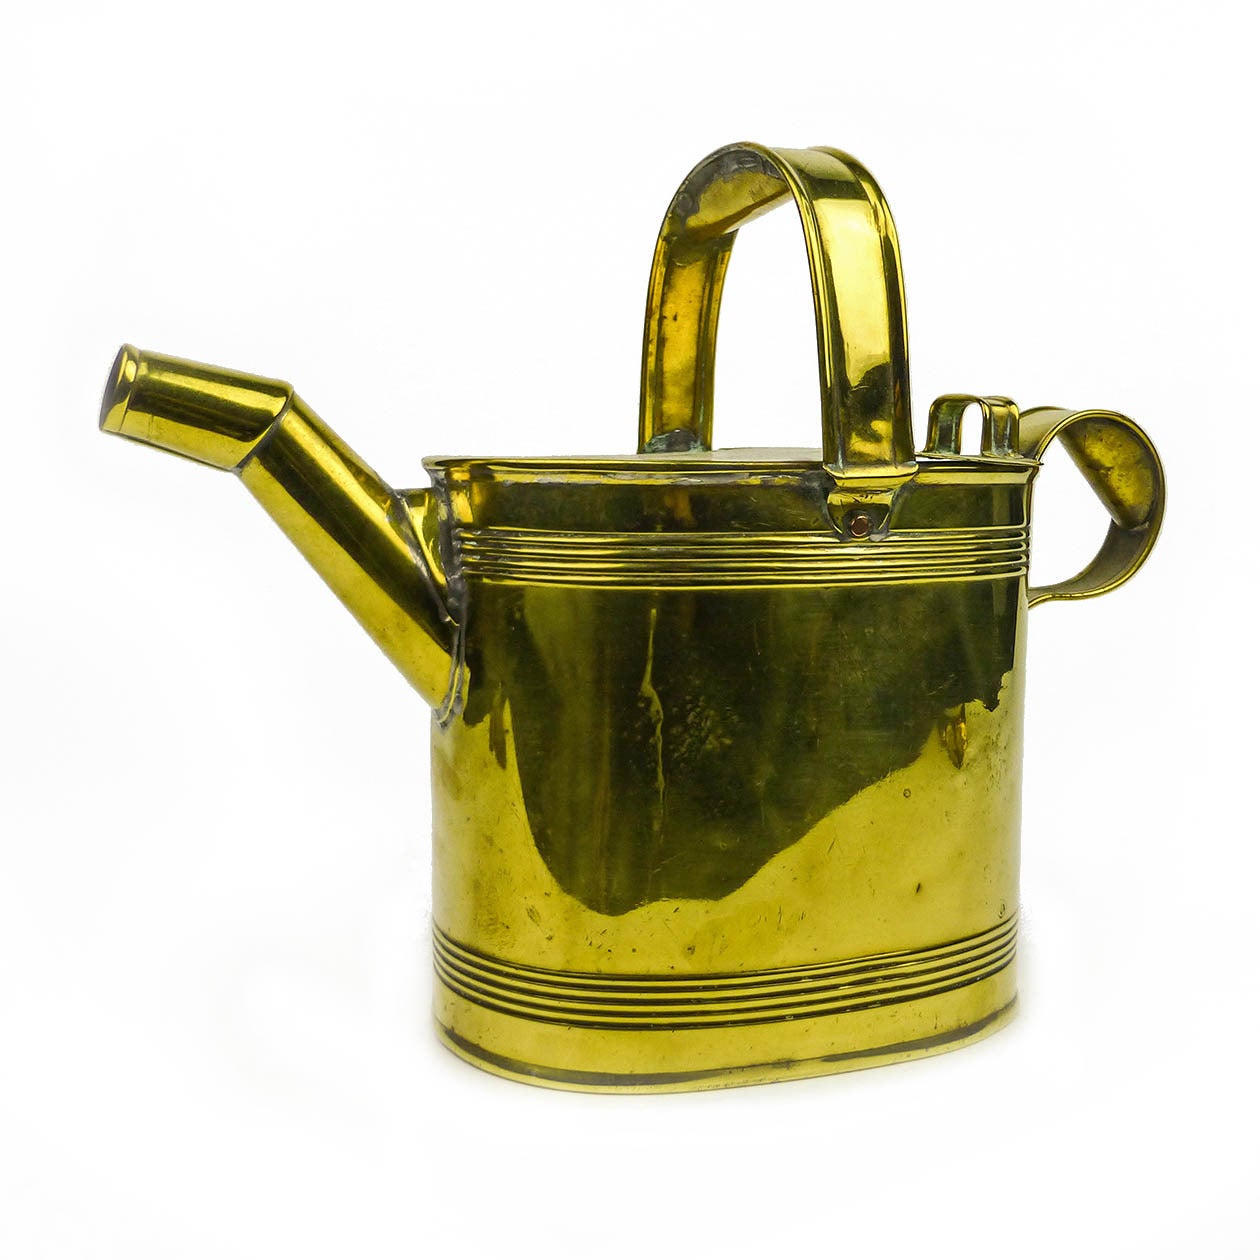 English Victorian Brass Water Can Circa 1880.

5 pint capacity.